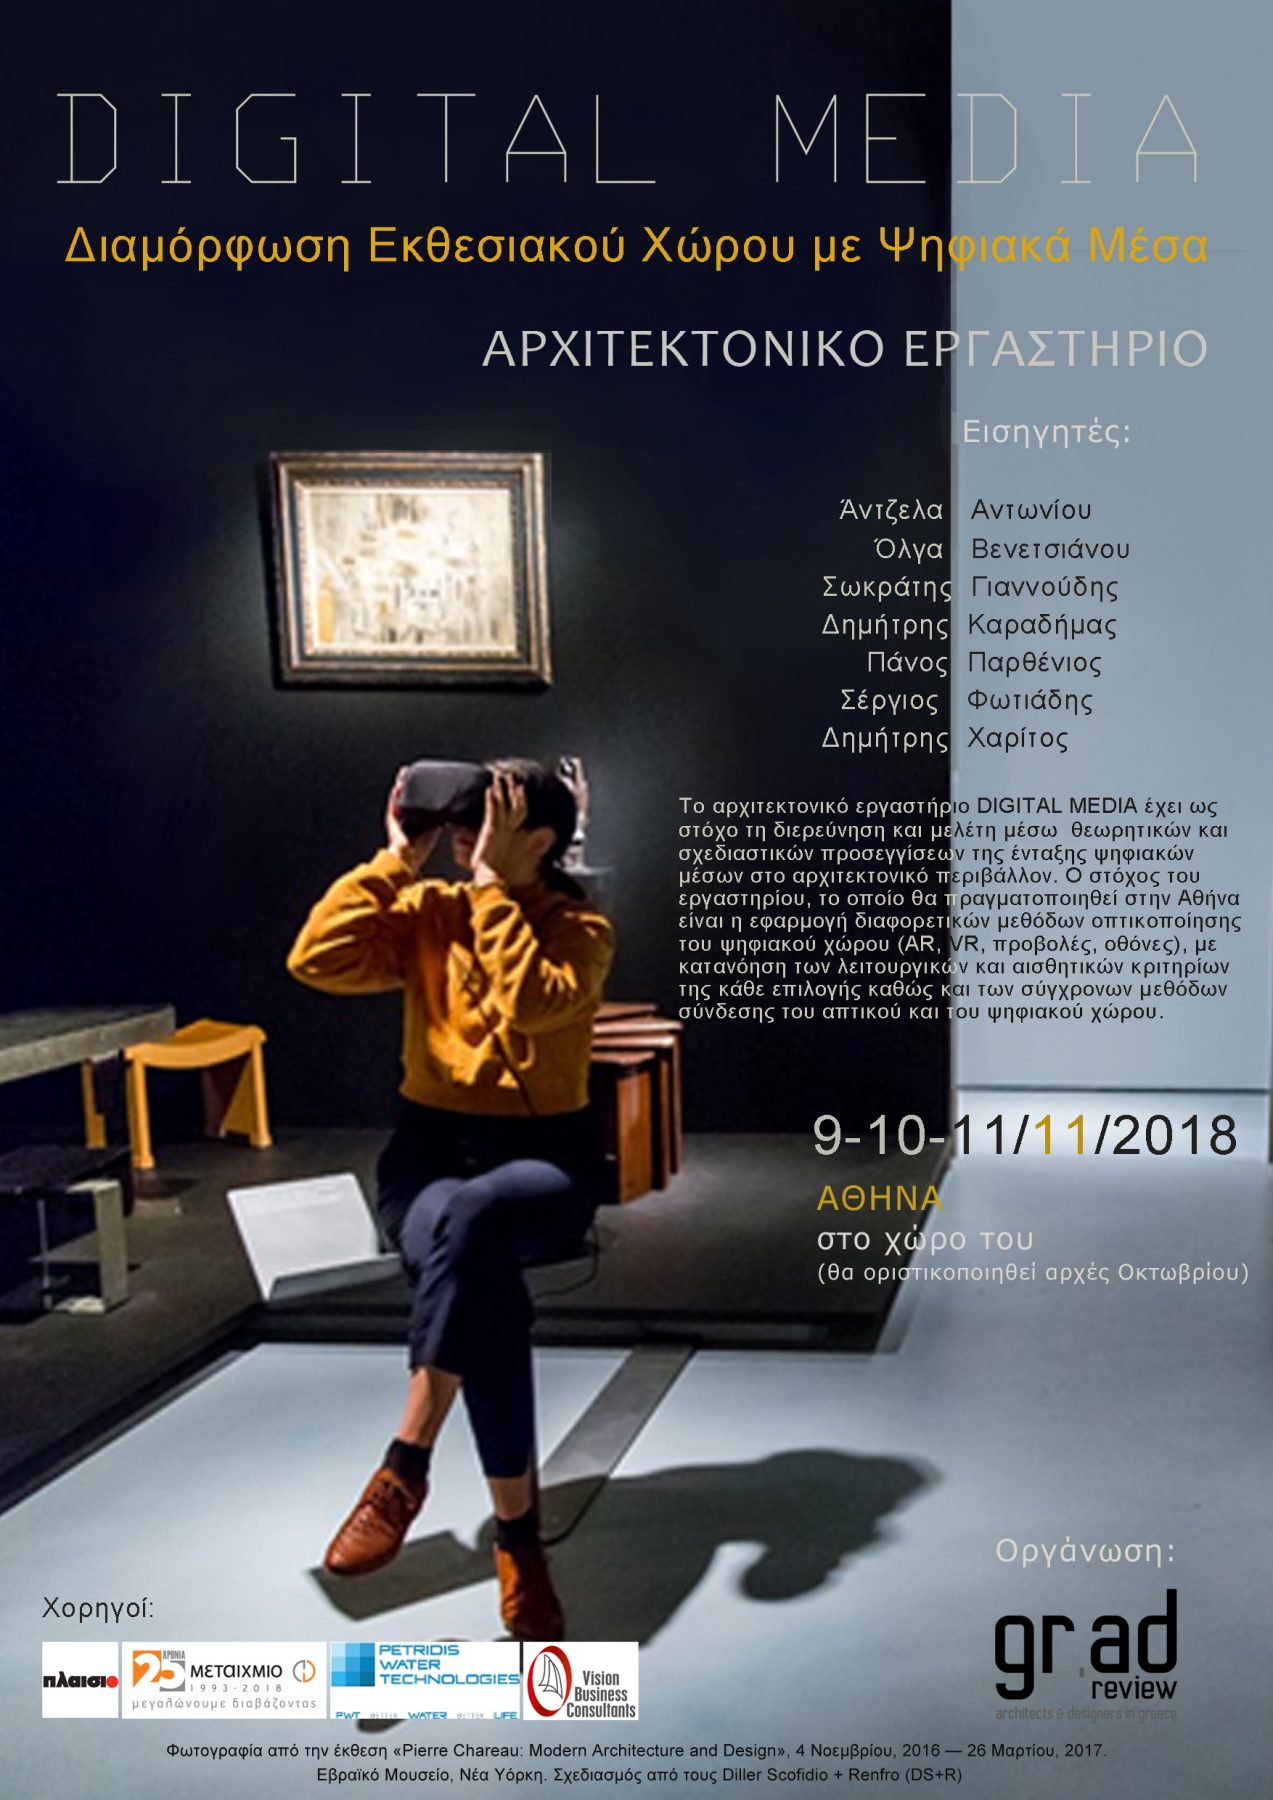 DIGITAL MEDIA, workshop, μουσείο μπενάκη, 2018, εργαστήριο, νέες τεχνολογίες